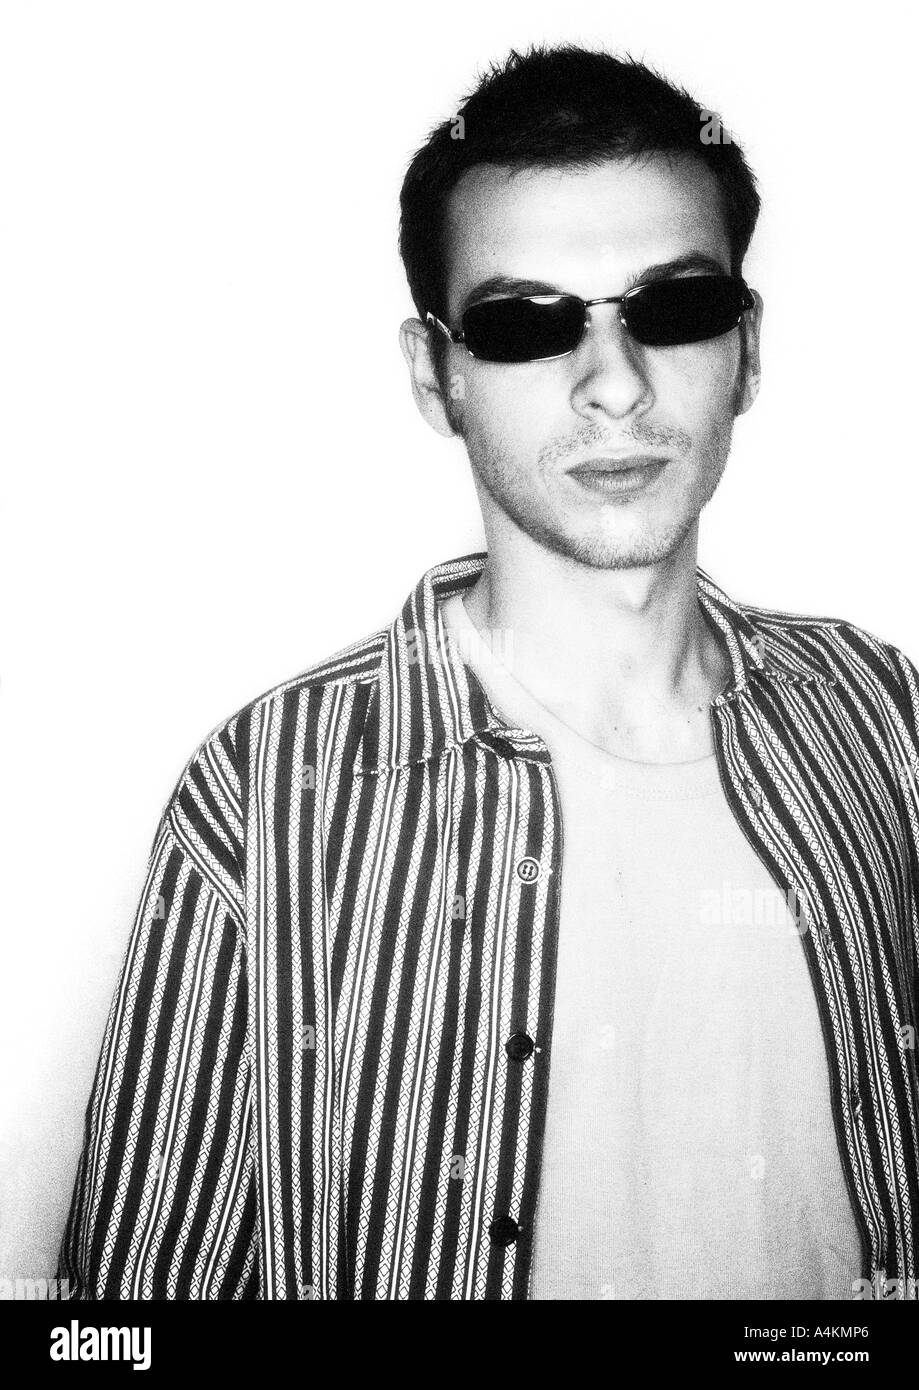 Man with sunglasses, portait, b&w. Stock Photo